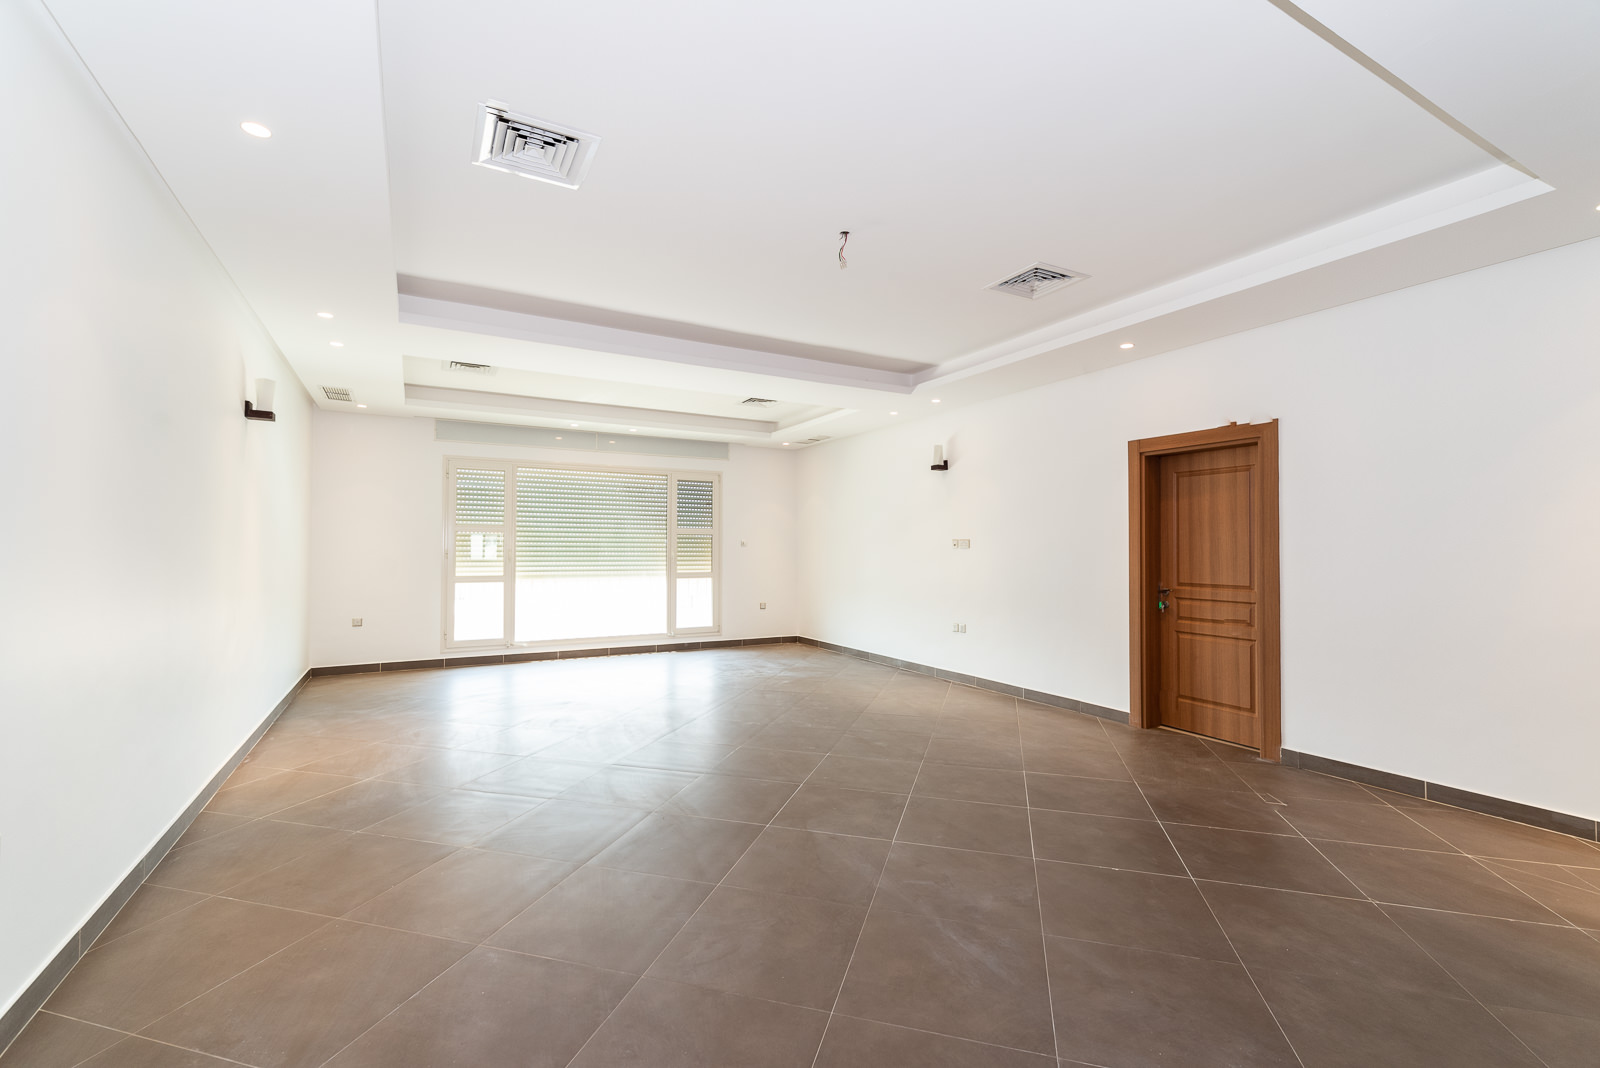 Mishref – very nice, spacious, four bedroom floor